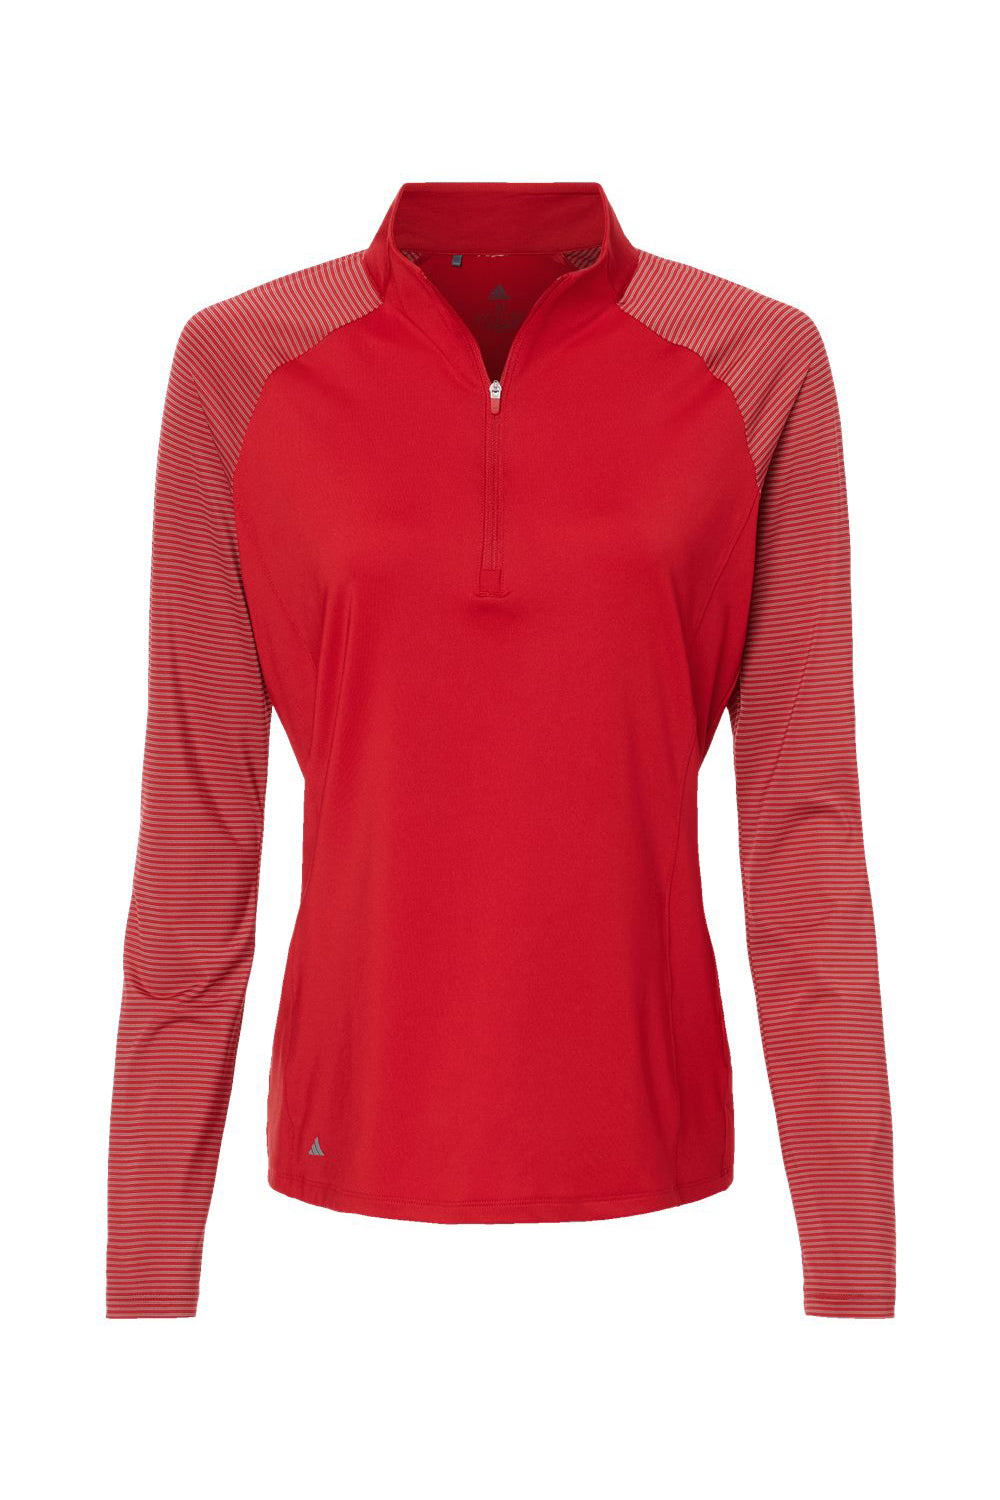 Adidas A521 Womens Stripe Block Moisture Wicking 1/4 Zip Sweatshirt Team Power Red Flat Front